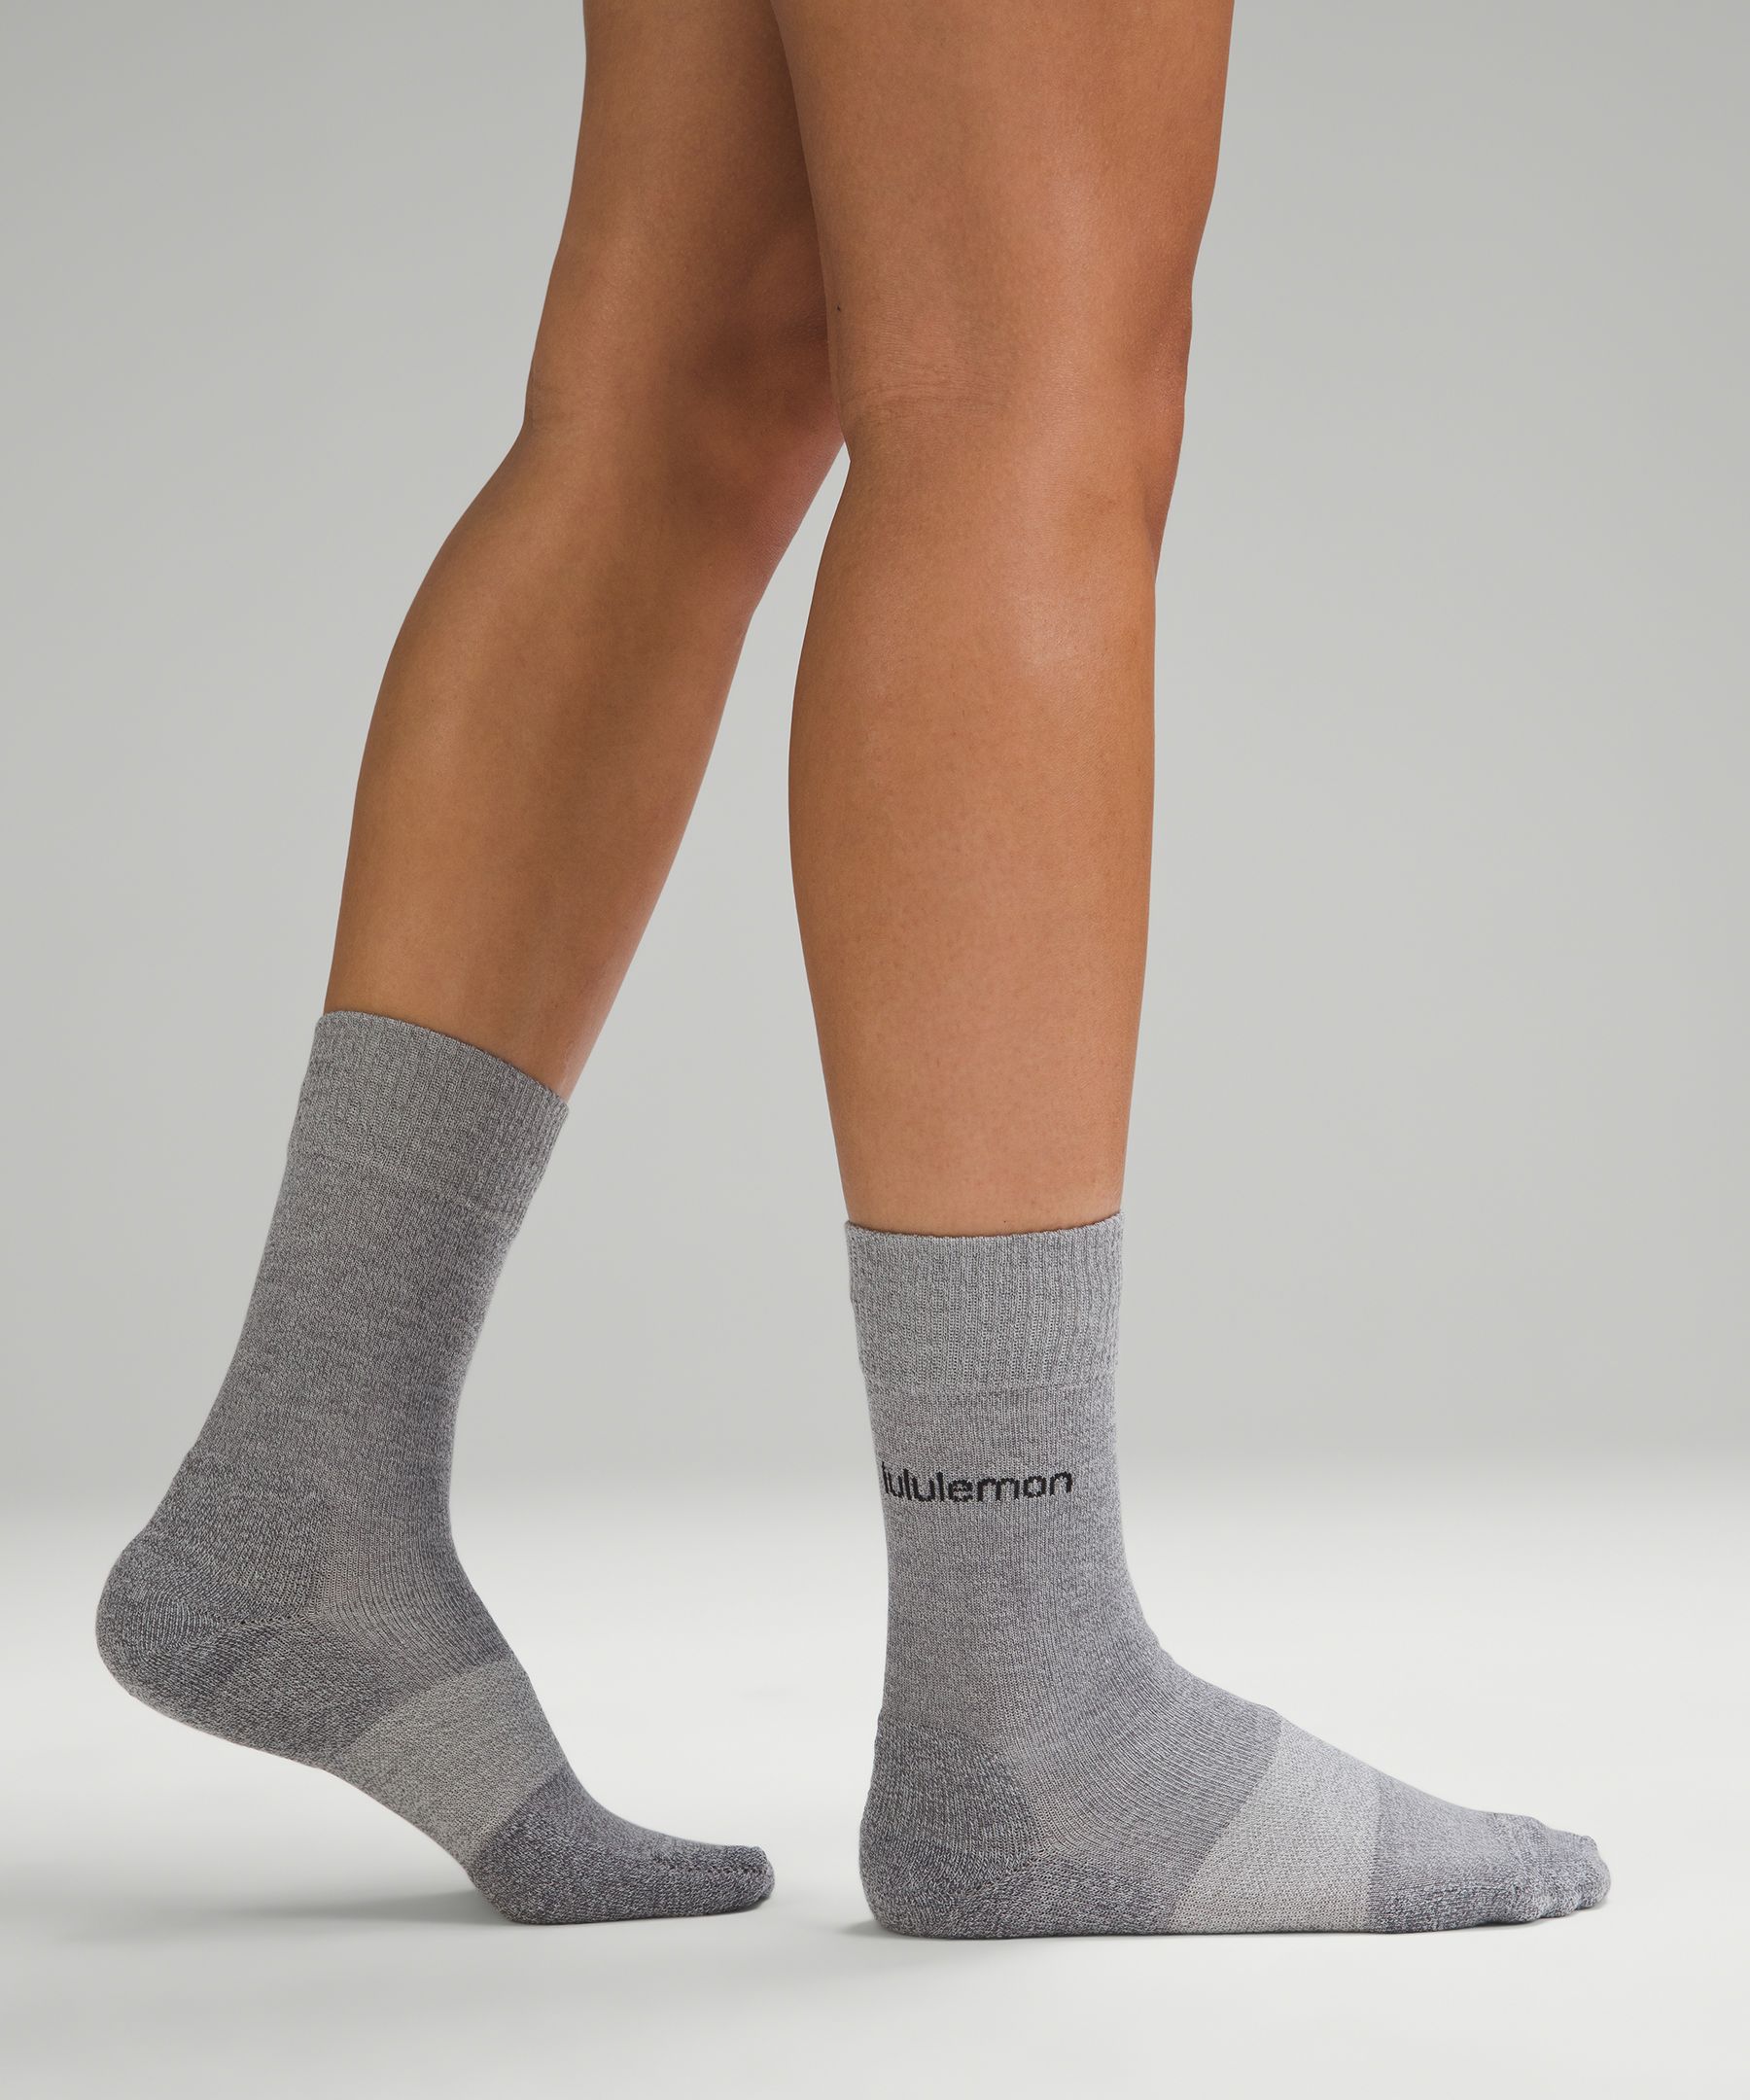 Lululemon athletica Women's Daily Stride Comfort No-Show Sock *3 Pack, Socks